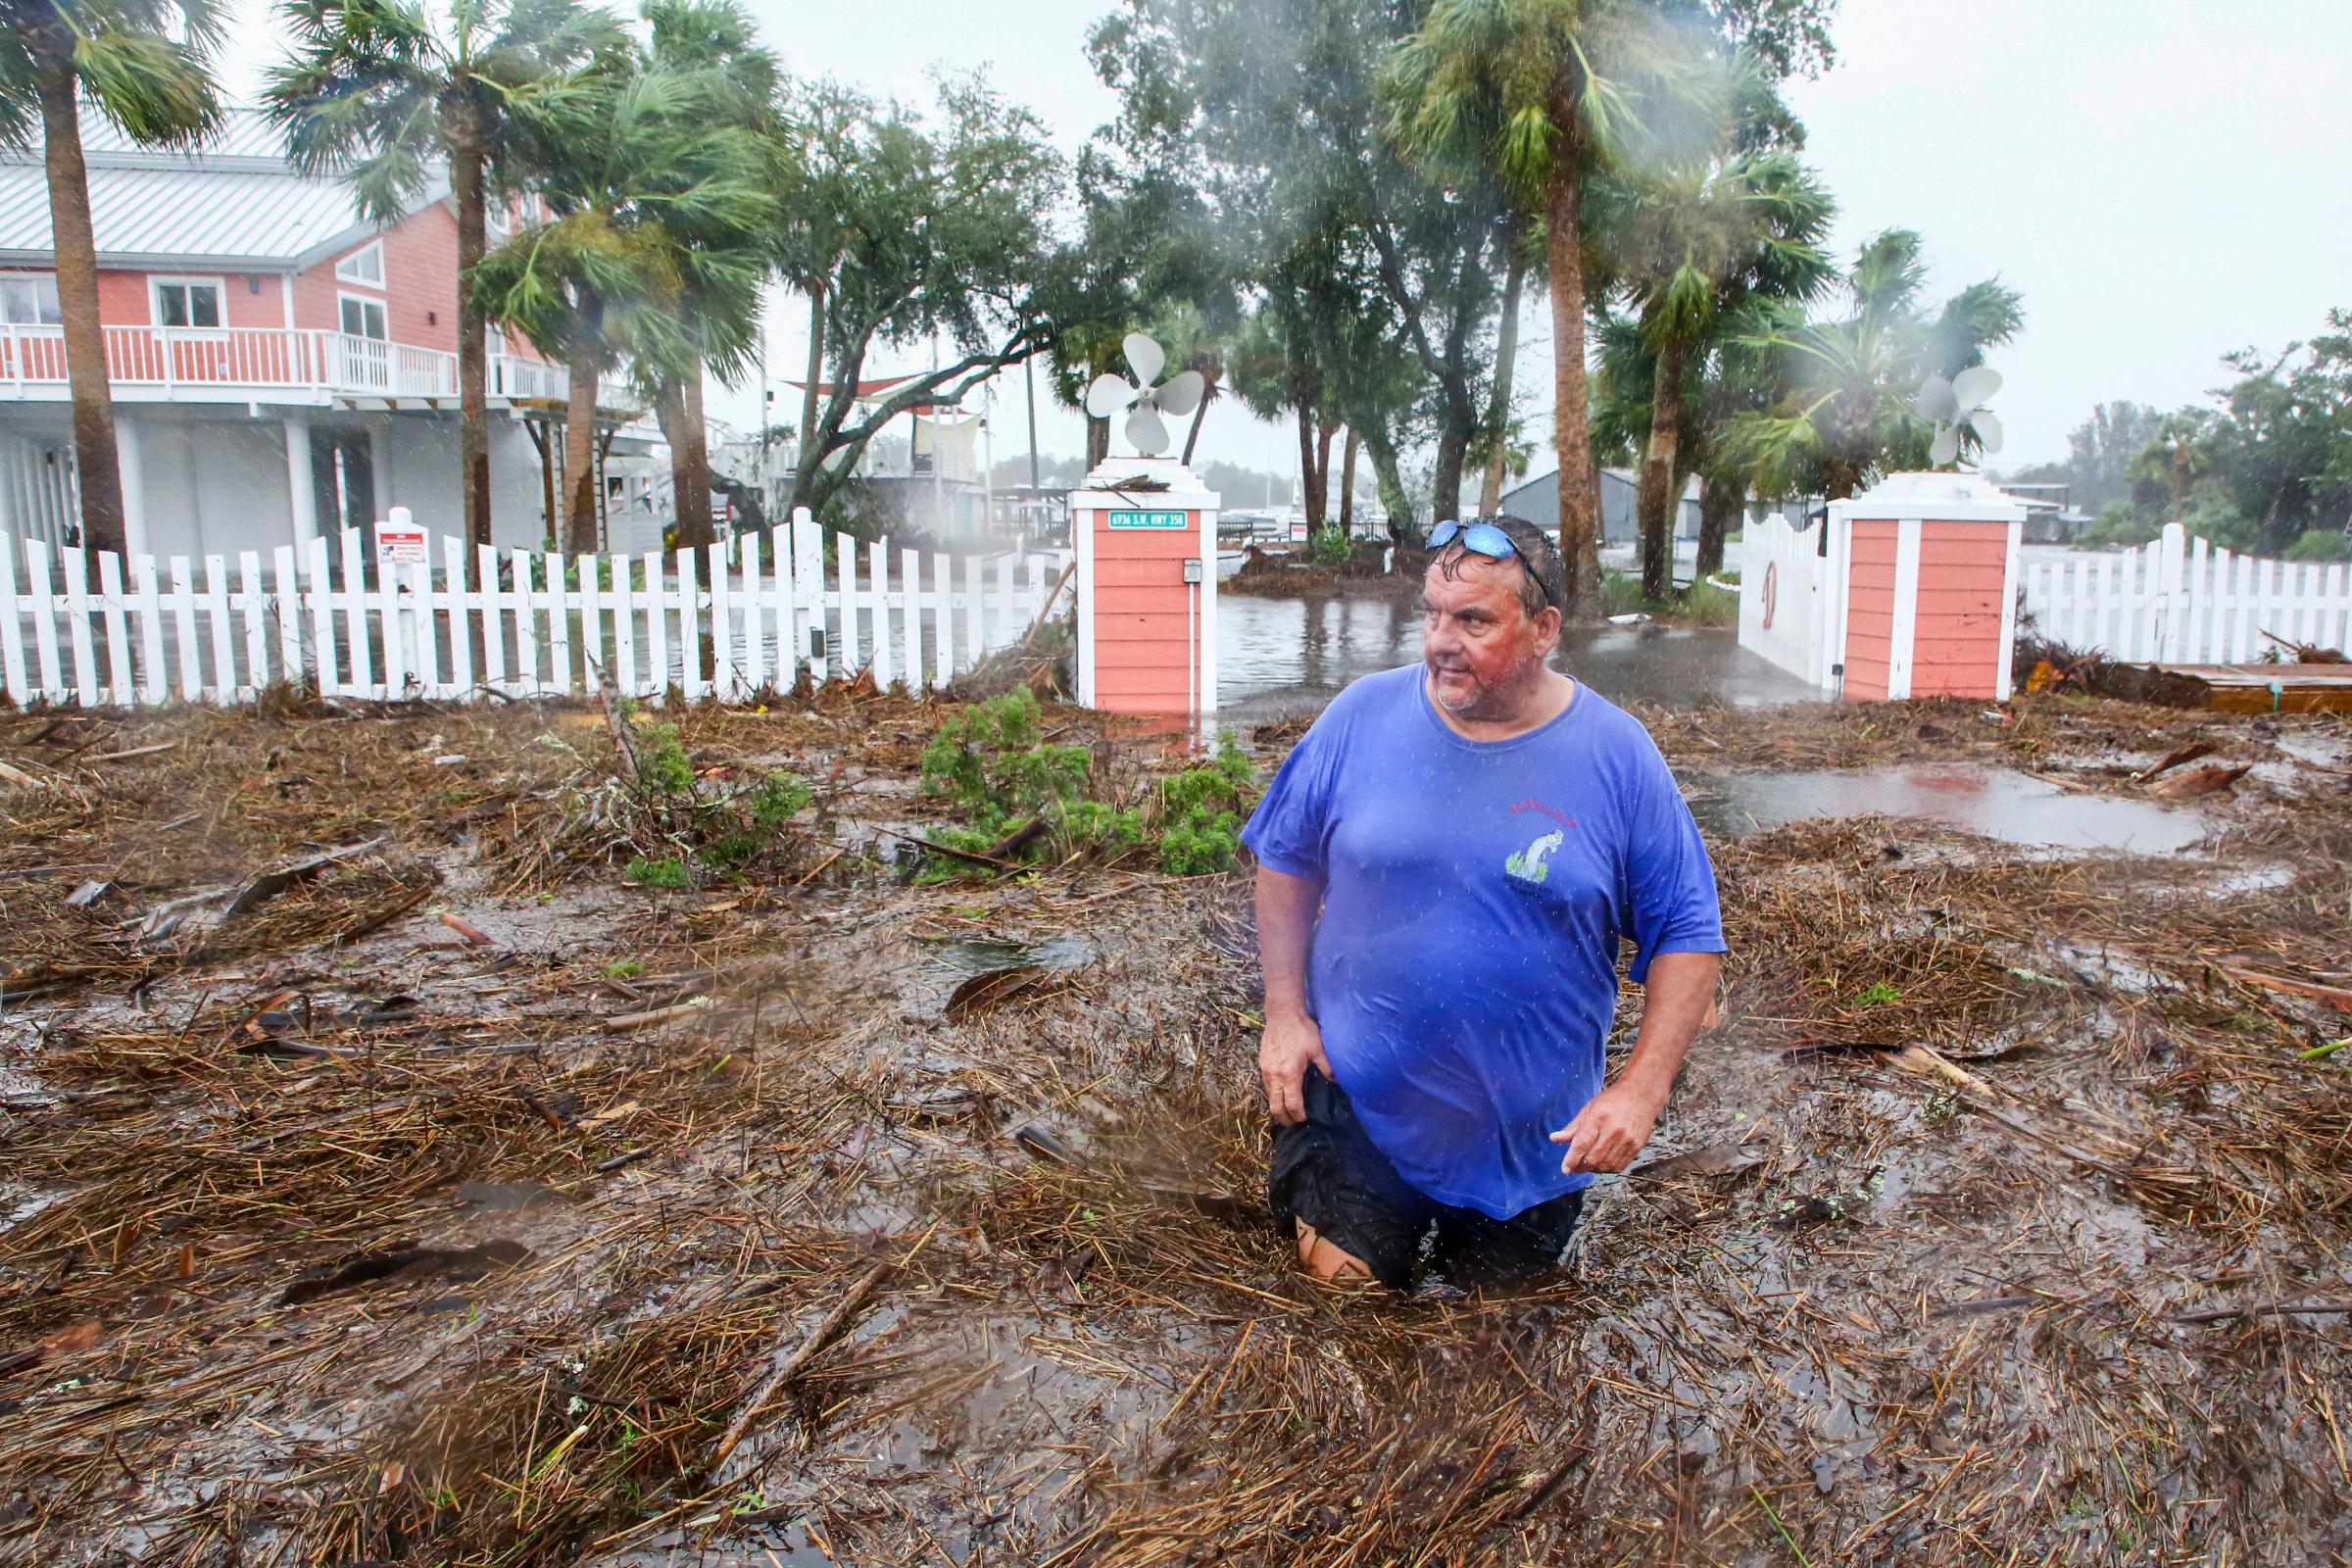 Idalia weakens to tropical storm after hitting Florida as powerful hurricane Witney Gazette pic image